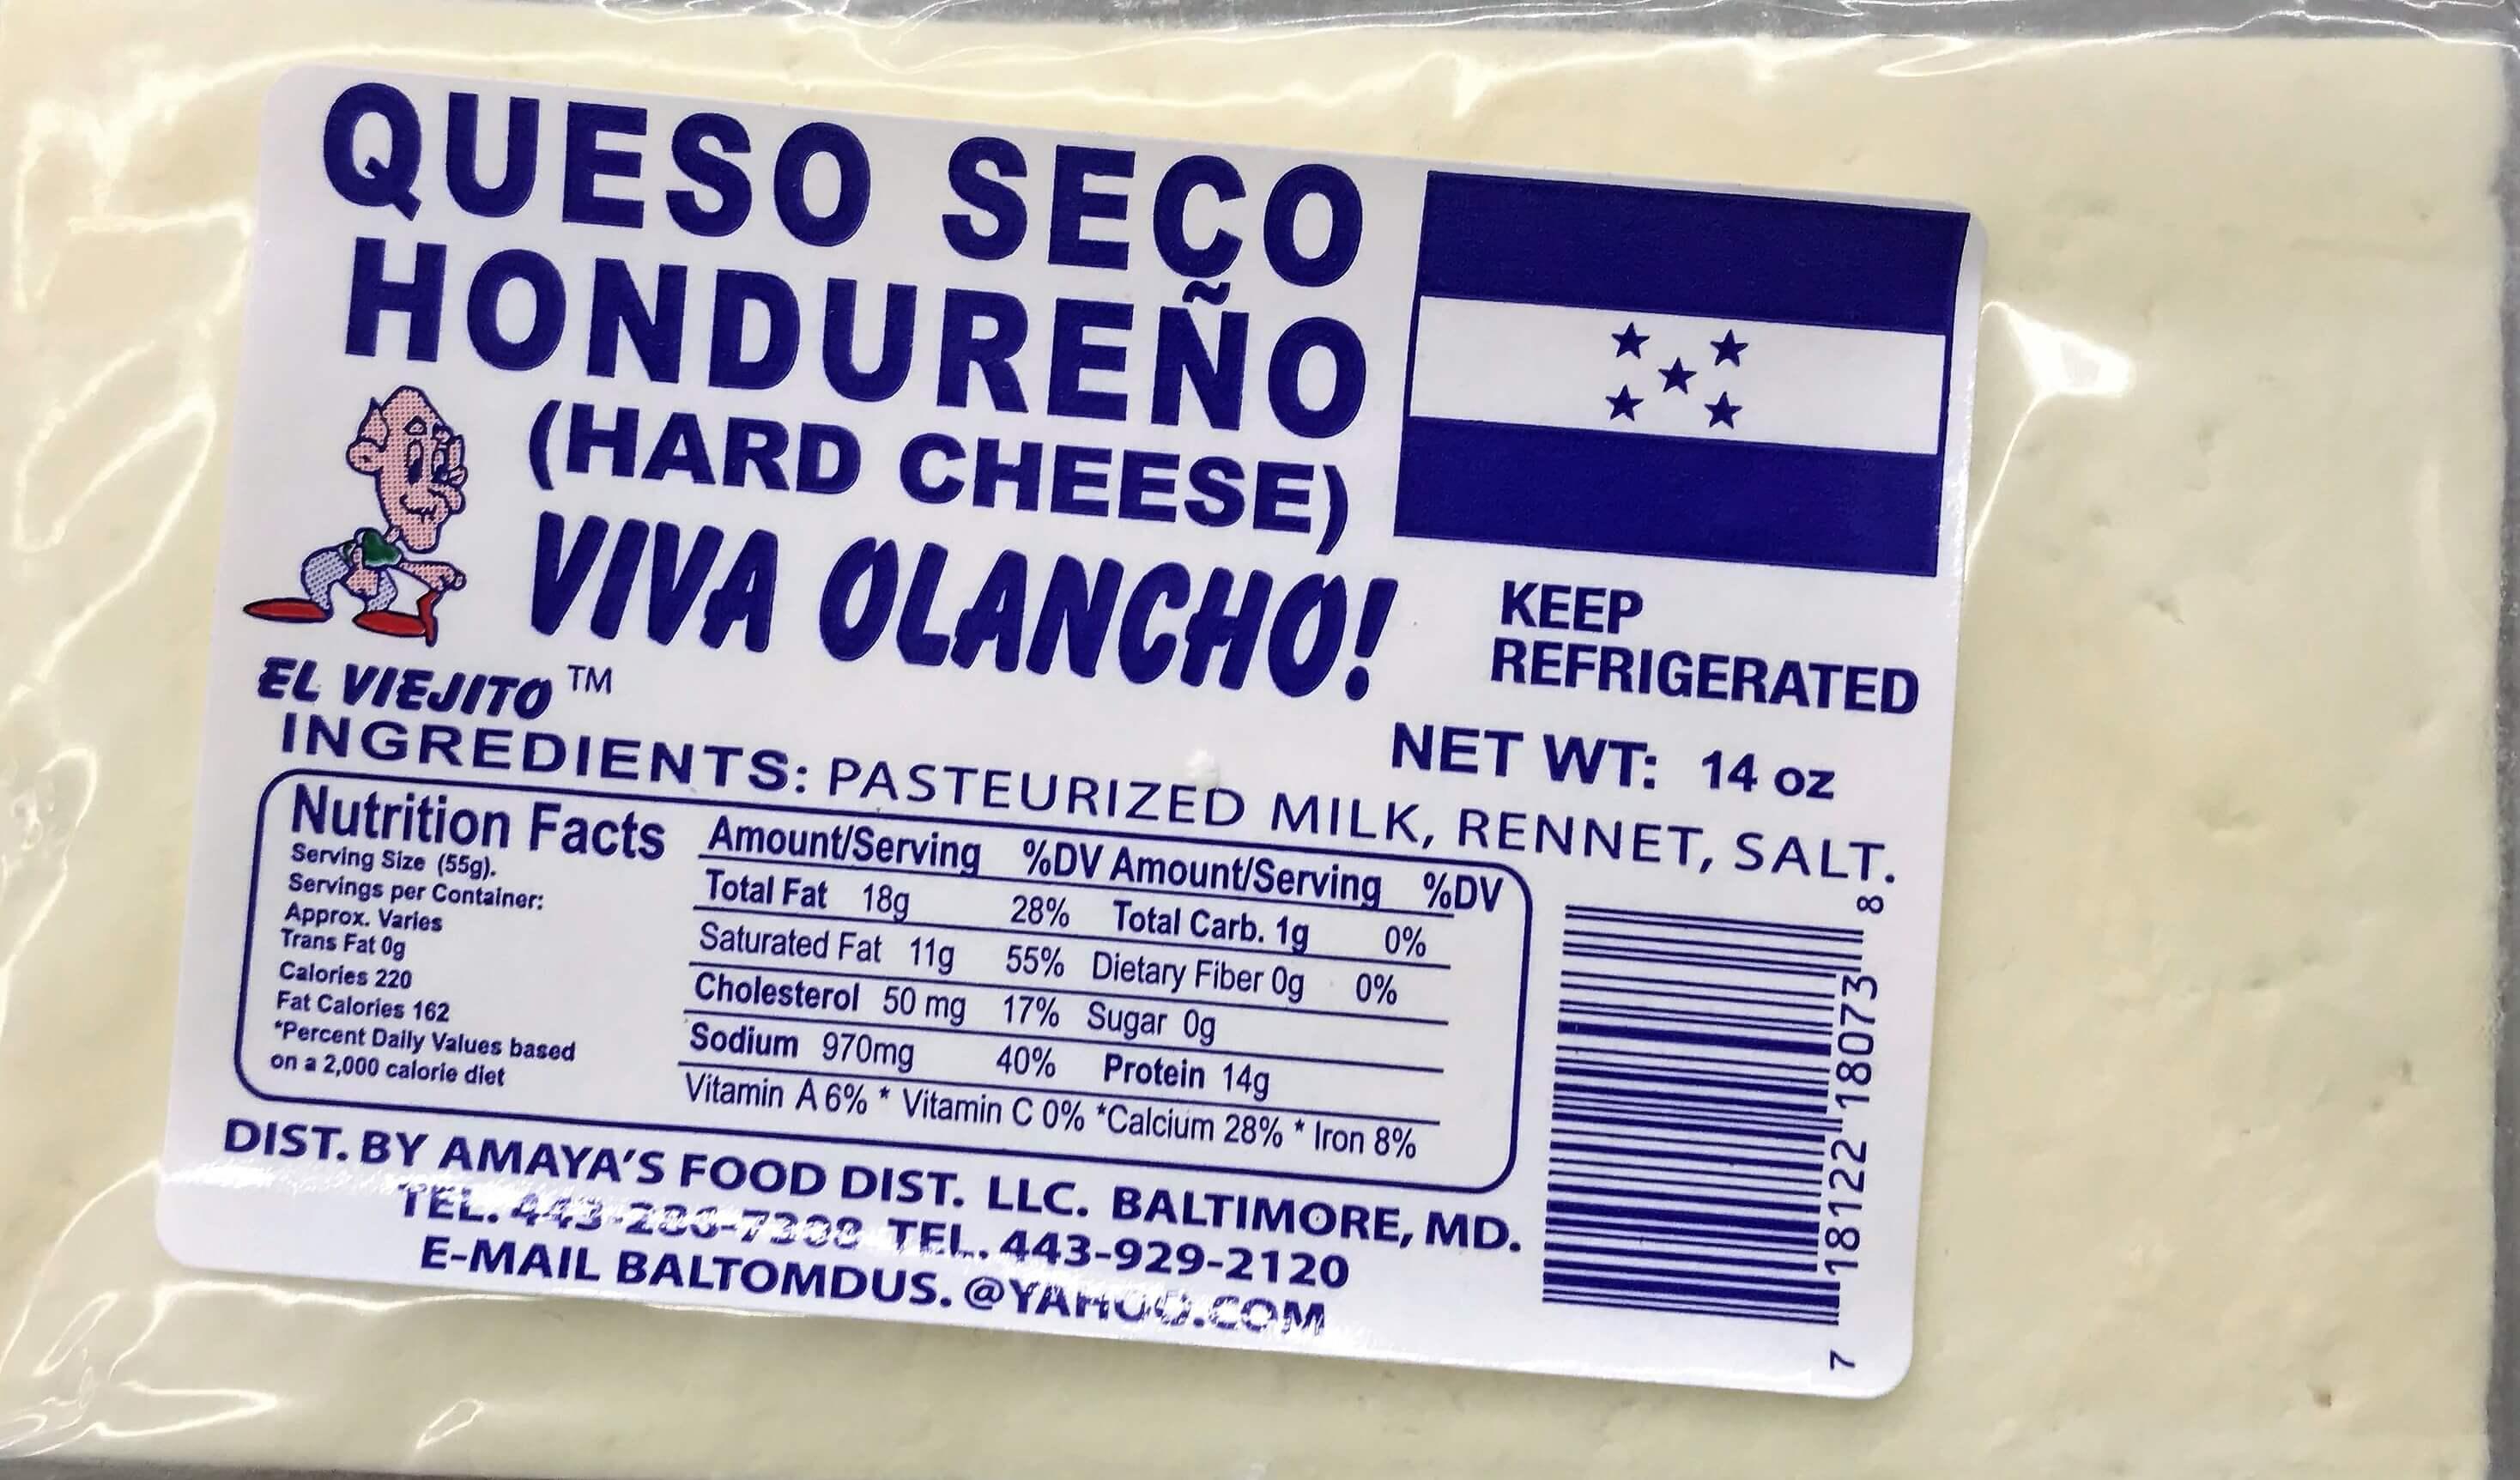 El Viejito - Hard Cheese Honduran 14 oz